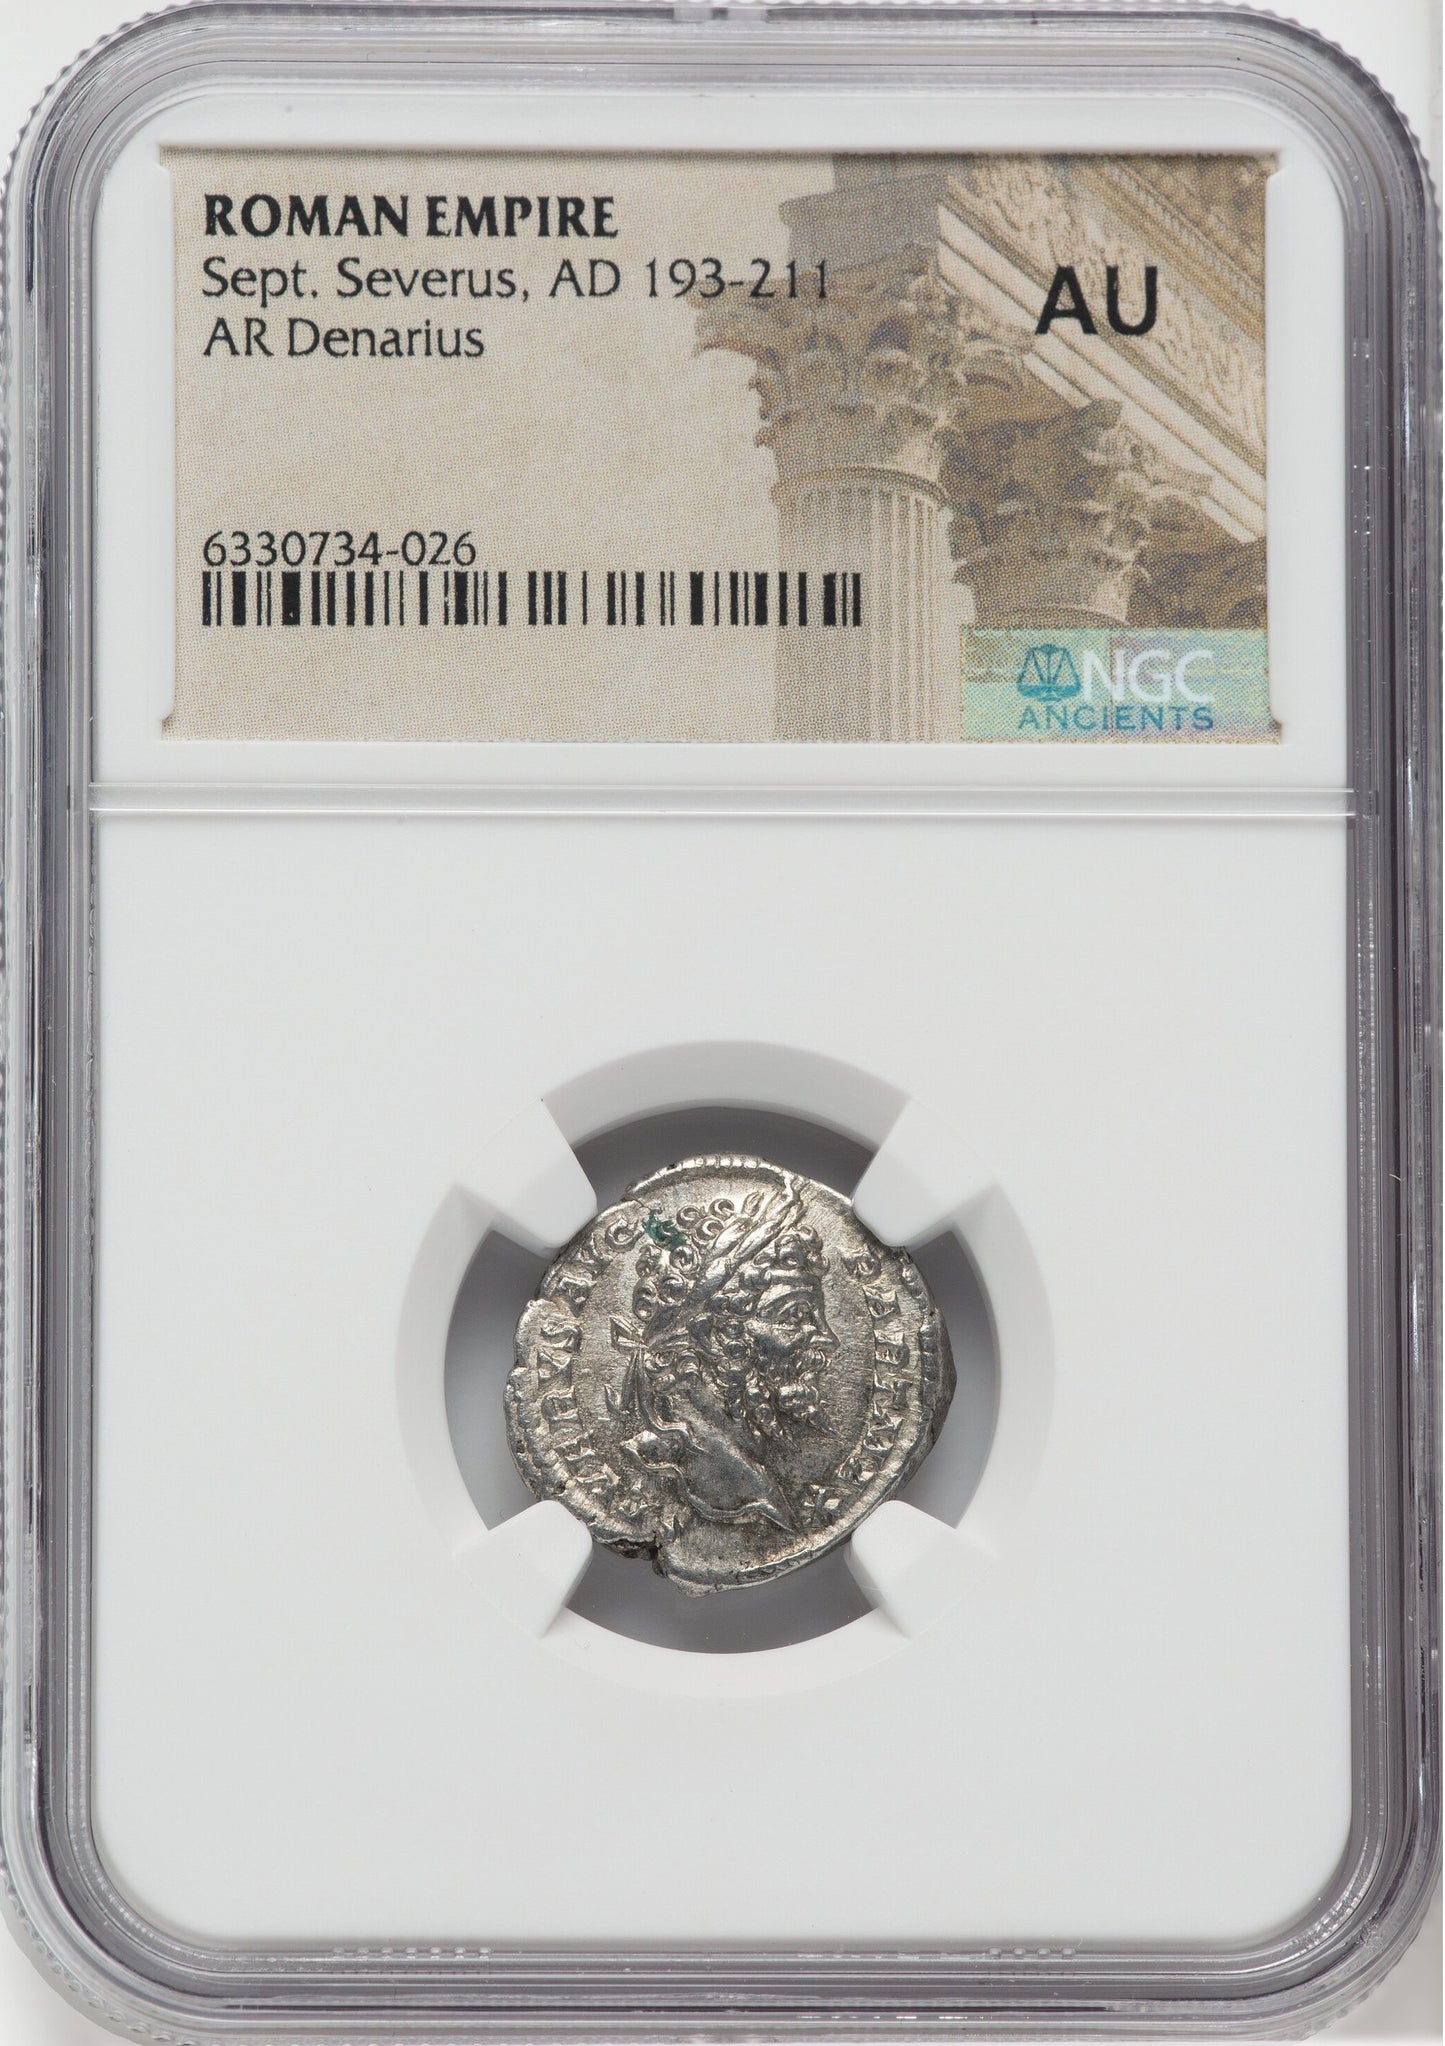 Roman Empire - Septimius Severus - Silver Denarius - NGC AU - RIC:167a